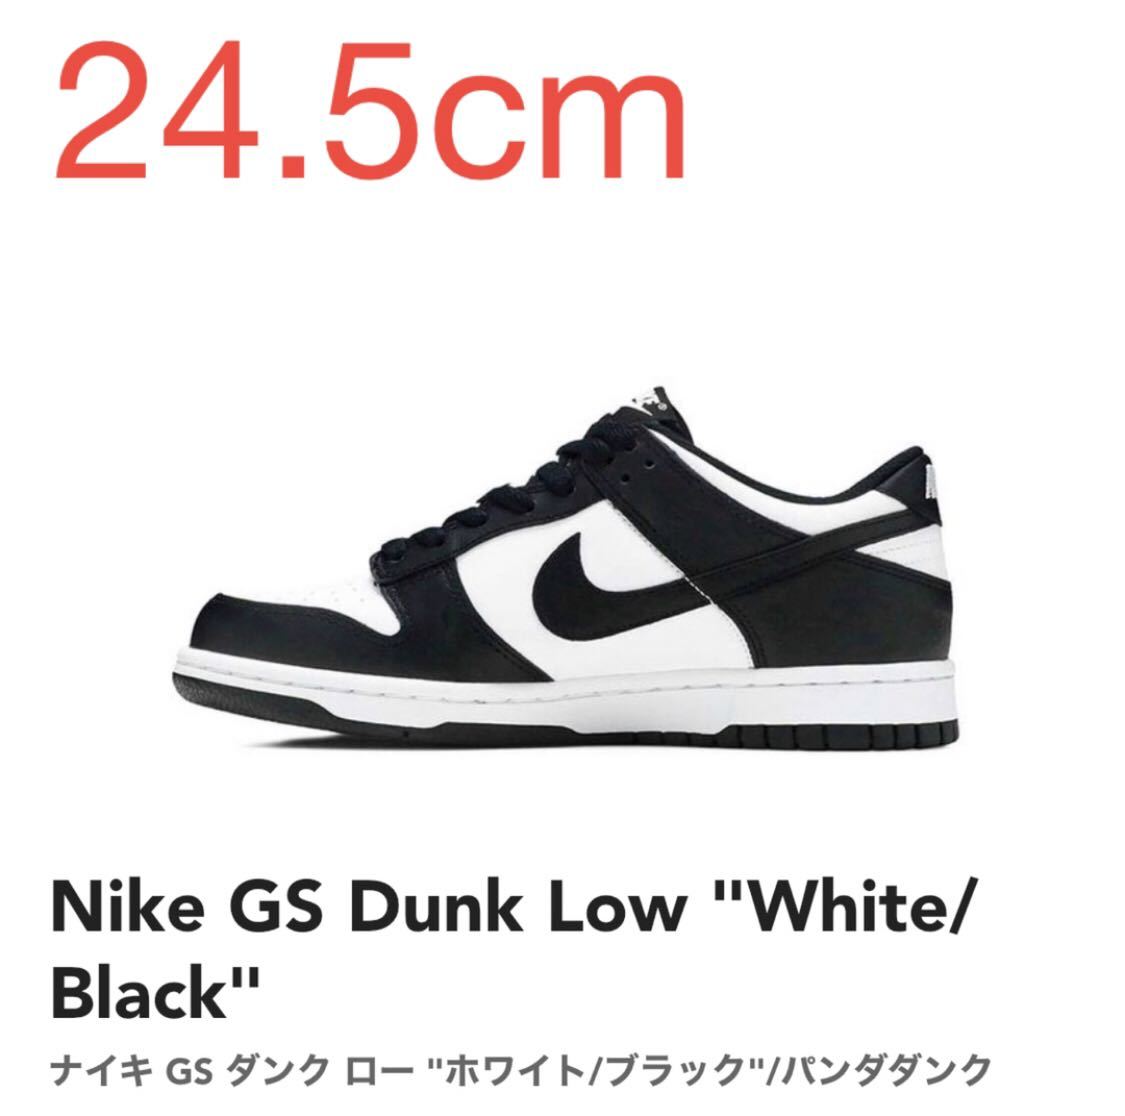 Nike GS Dunk Low White/Black ナイキ GS ダンク ロー ホワイト/ブラック/パンダダンク CW1590-100 24.5cm US6.5Y 新品 未使用